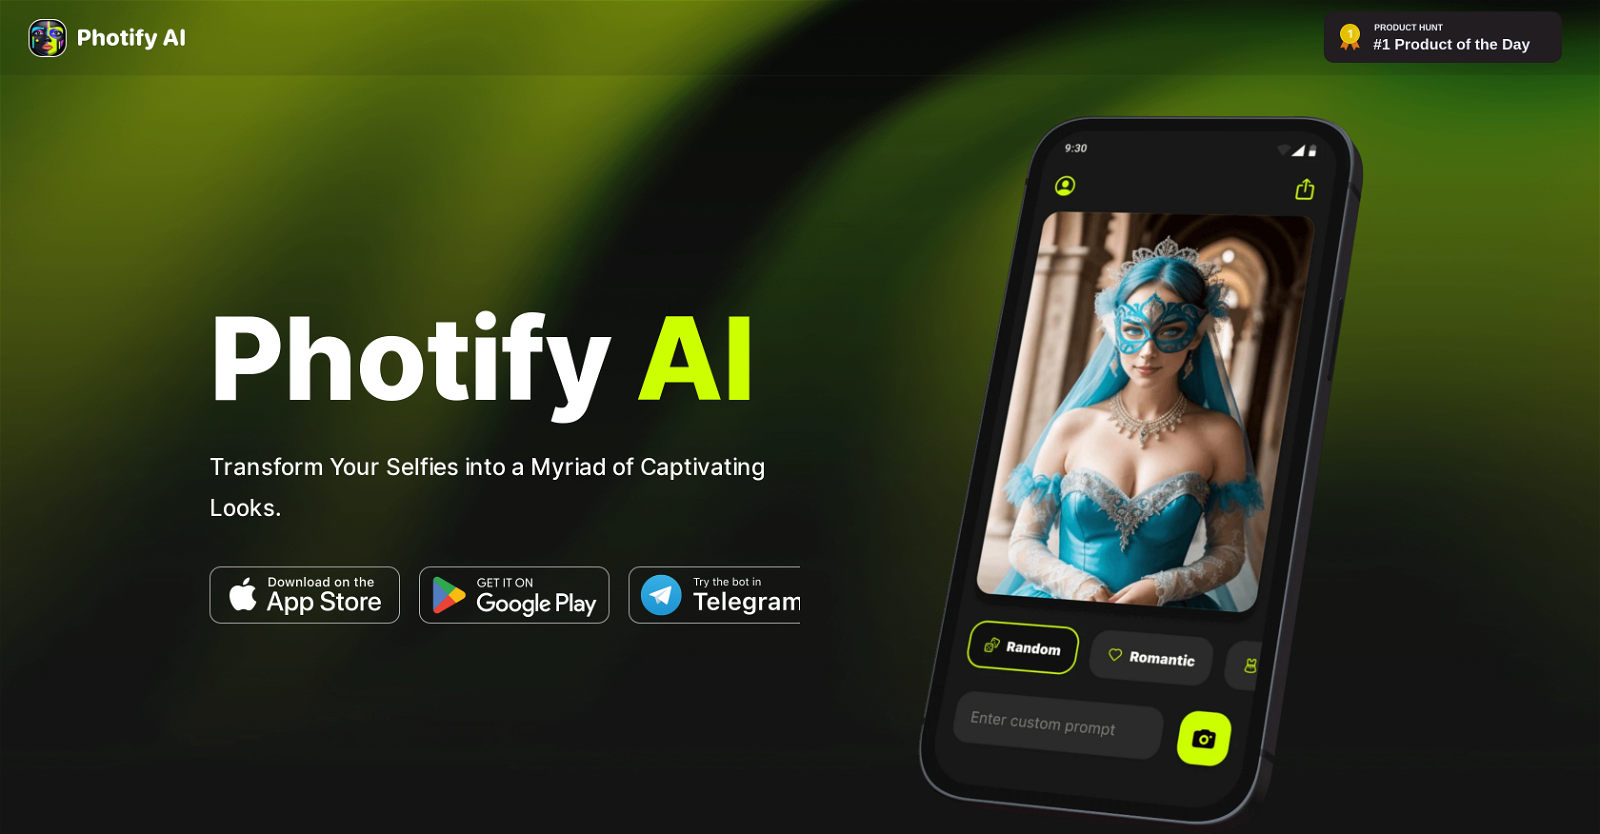 Photify AI website